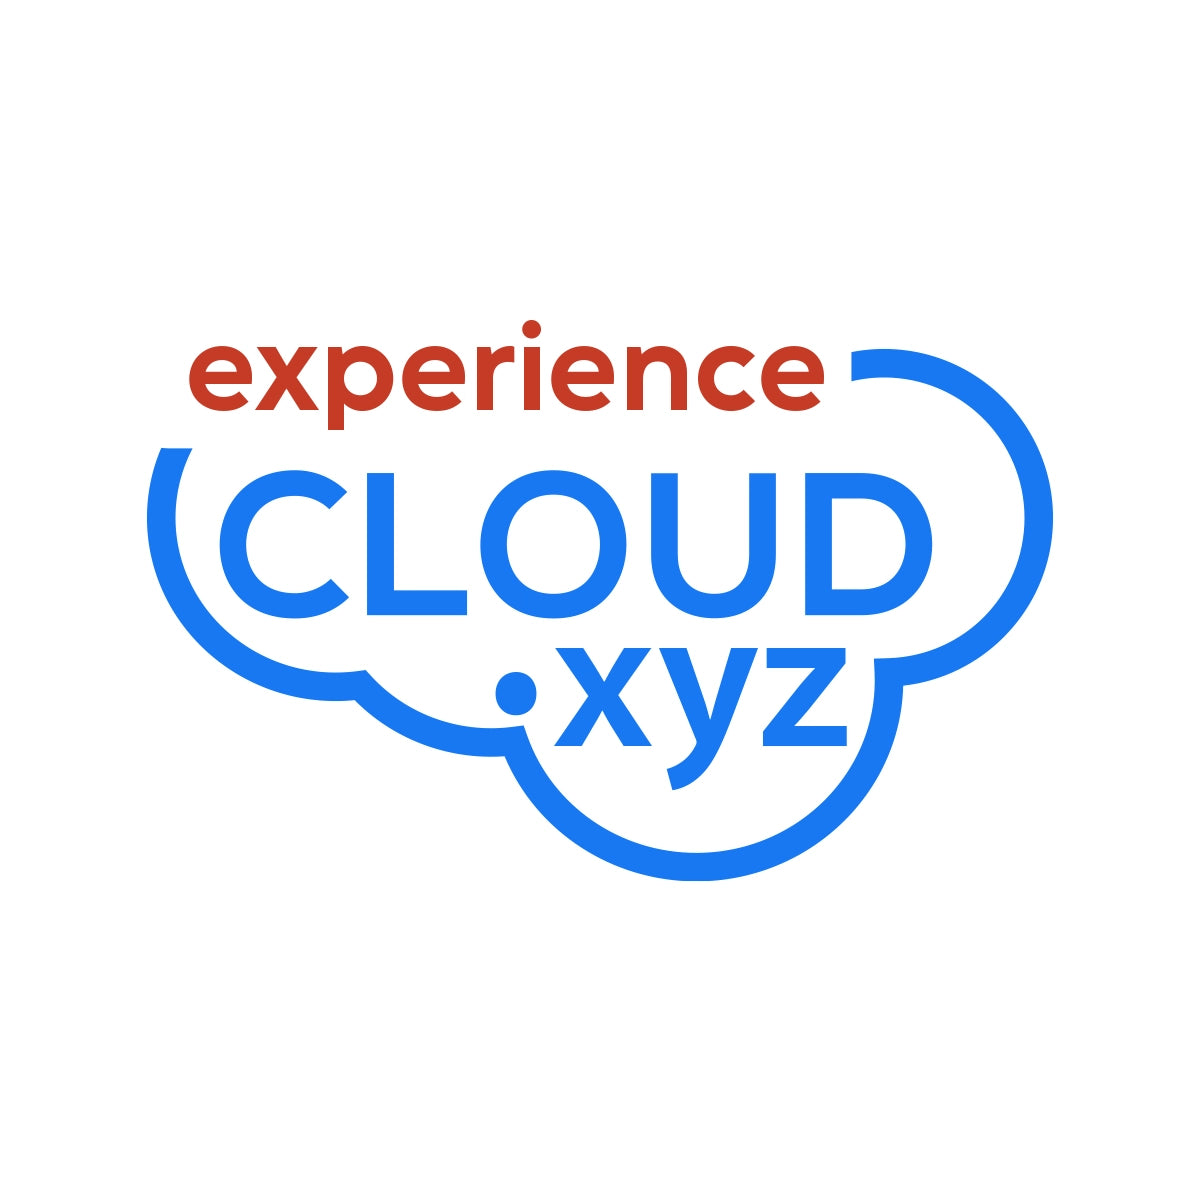 experiencecloud.xyz